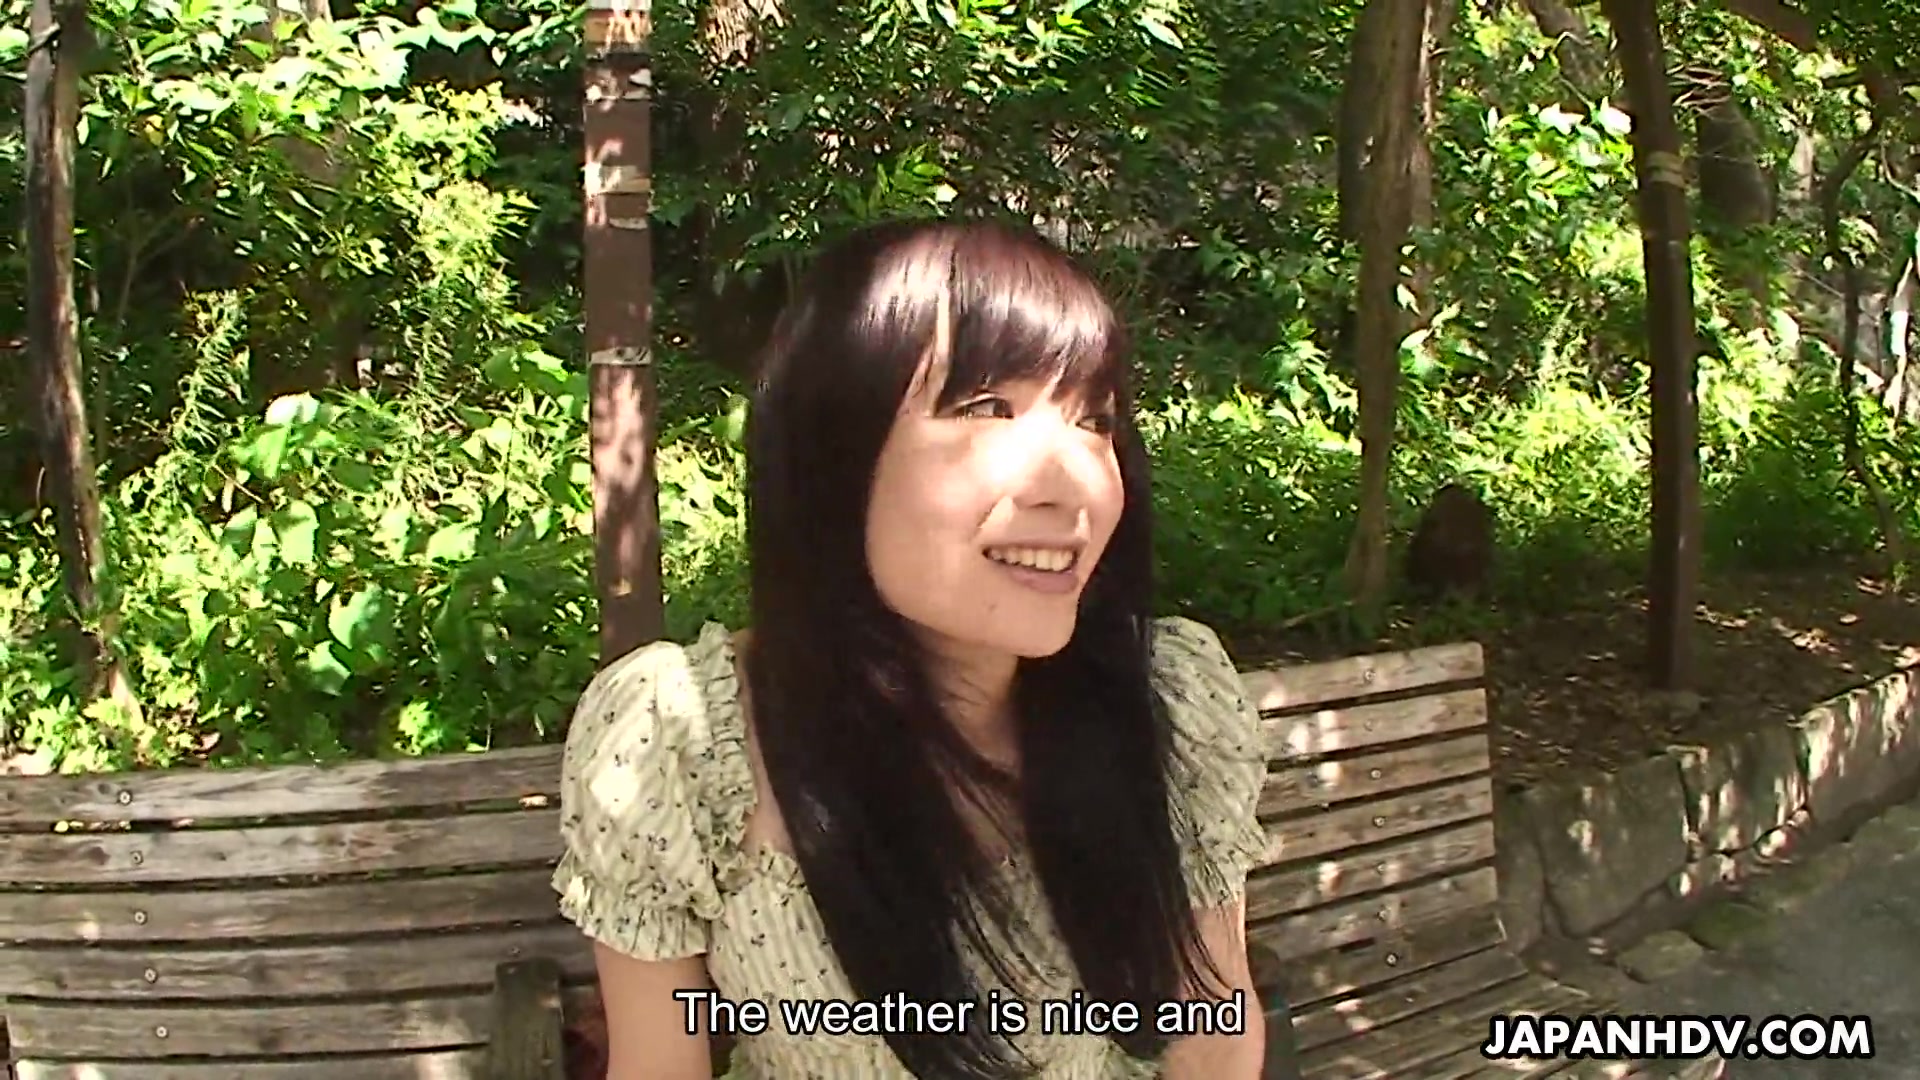 Japan HDV - Naughty Tsukushi has a vibrator in her pant